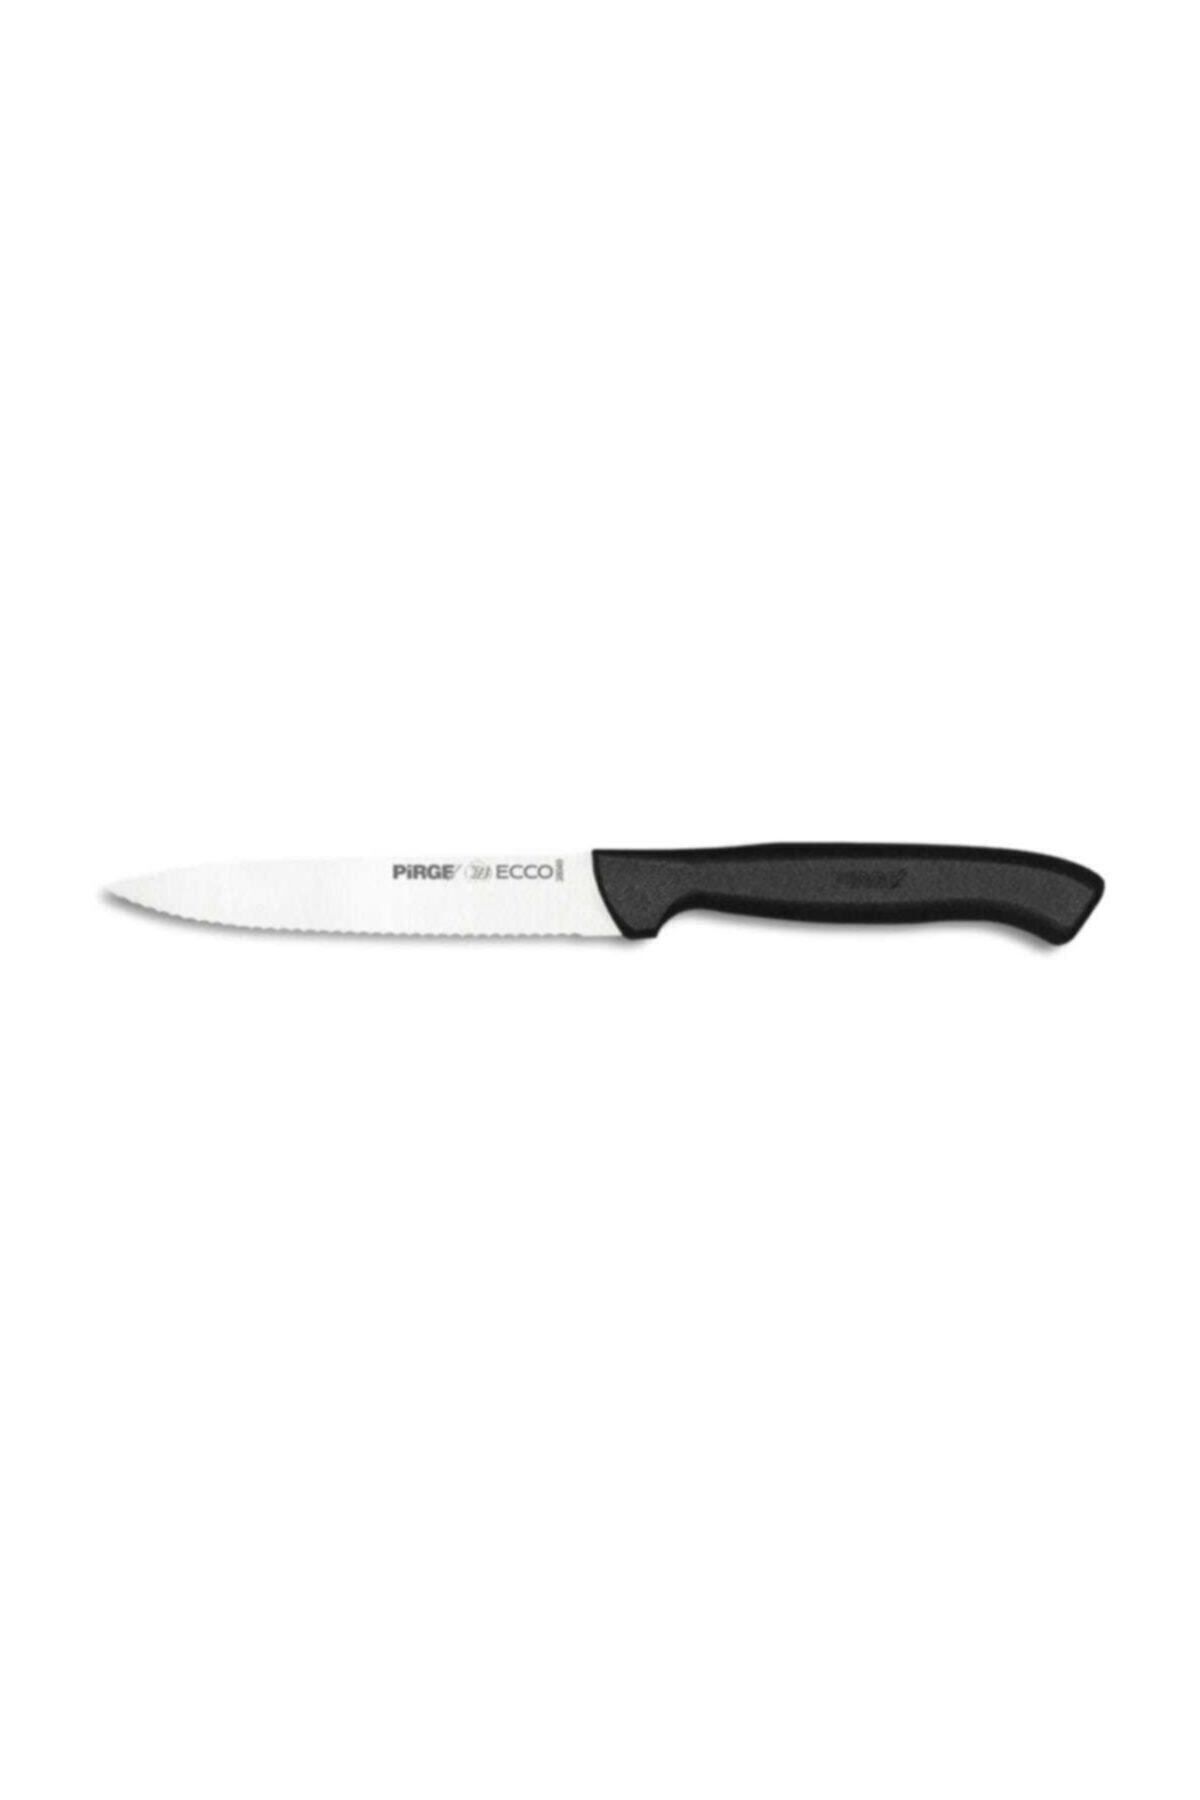 Pirge Ecco Sebze Bıçağı Dişli 12 Cm 38049